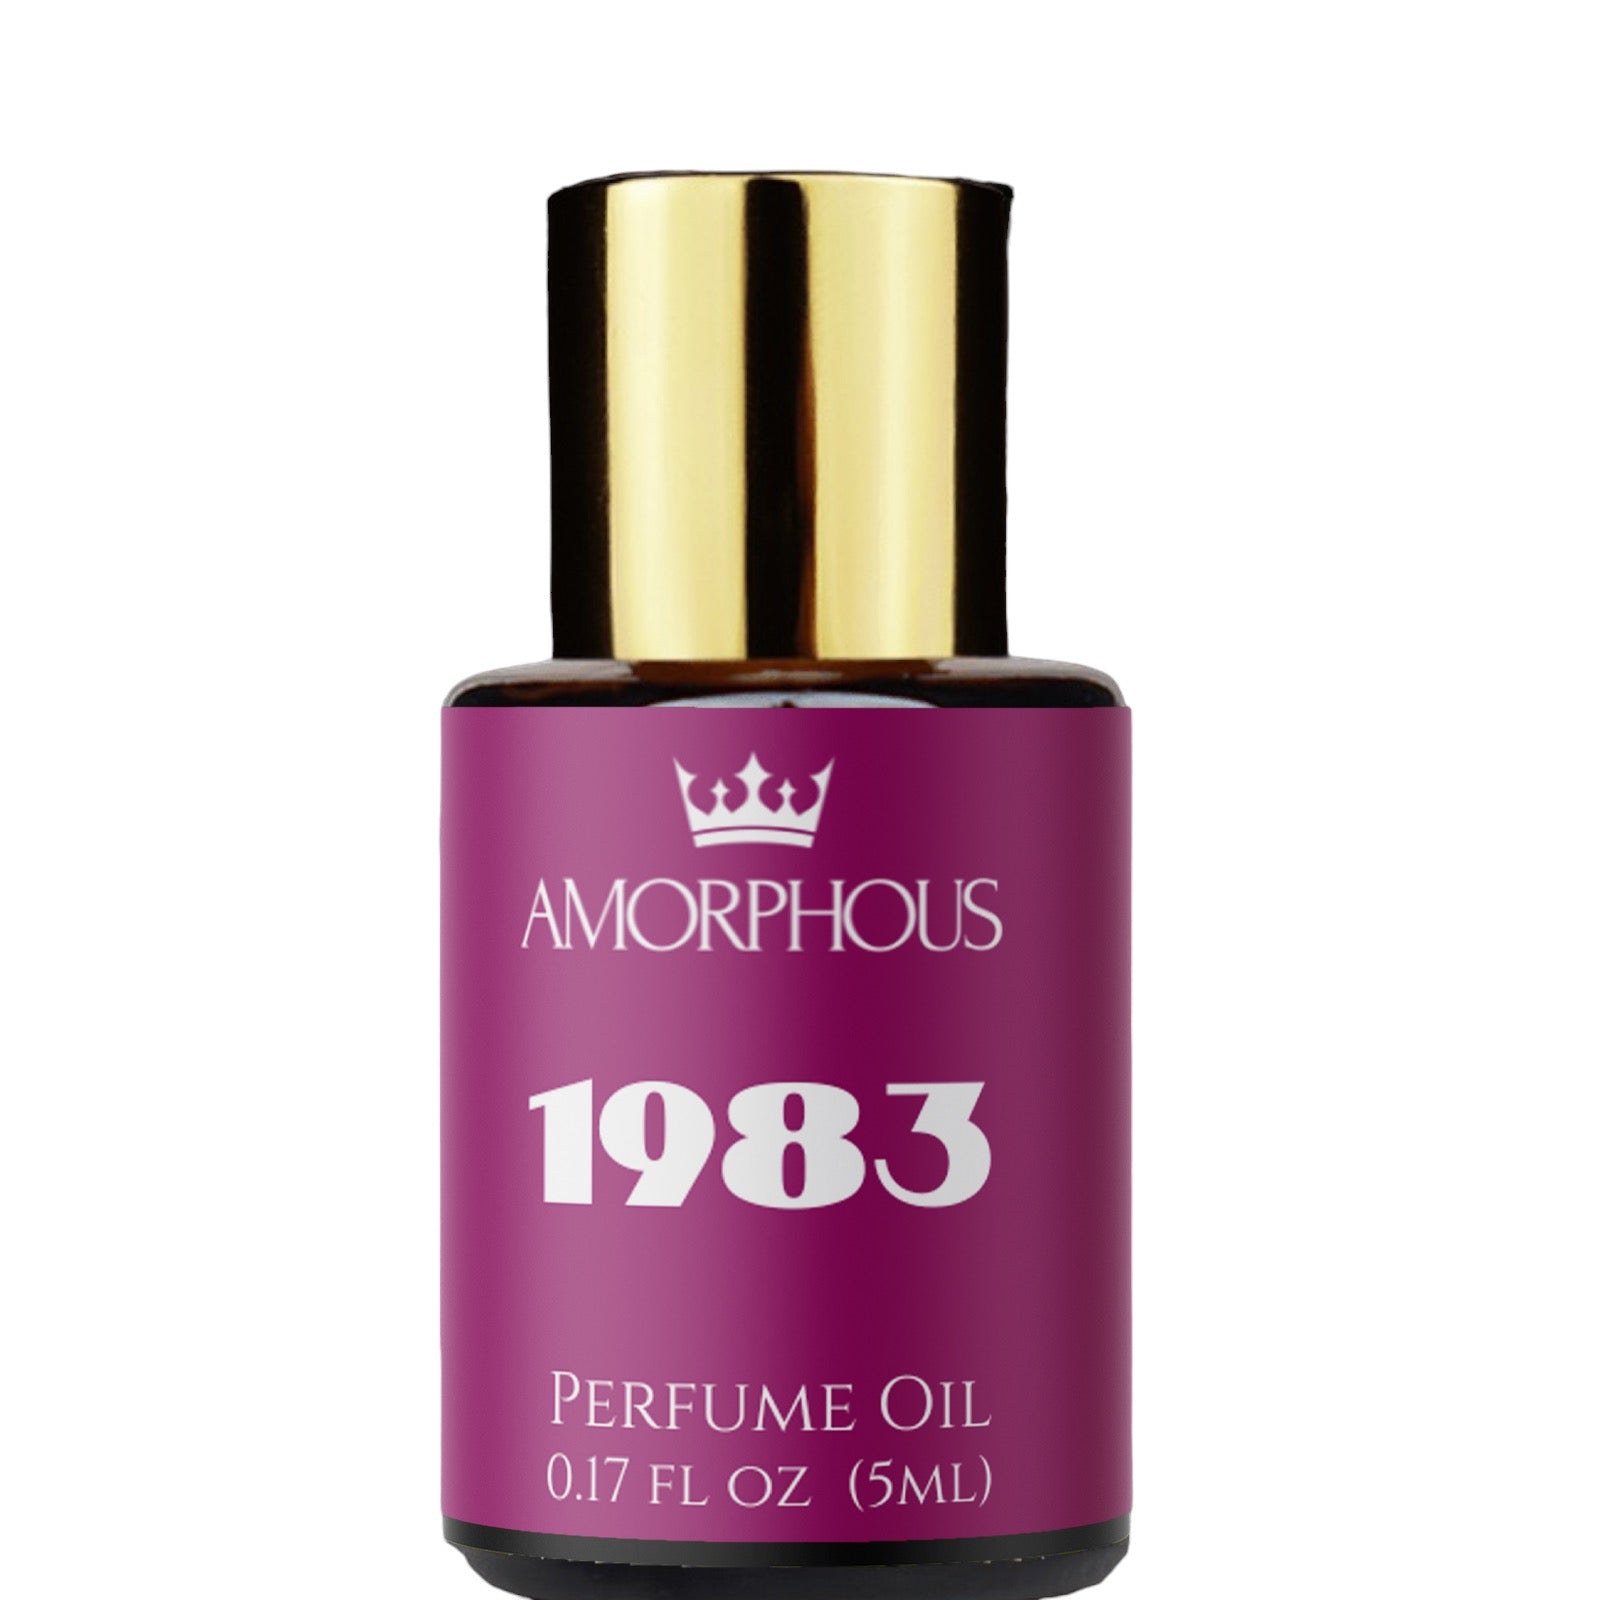 1980s inspired perfume